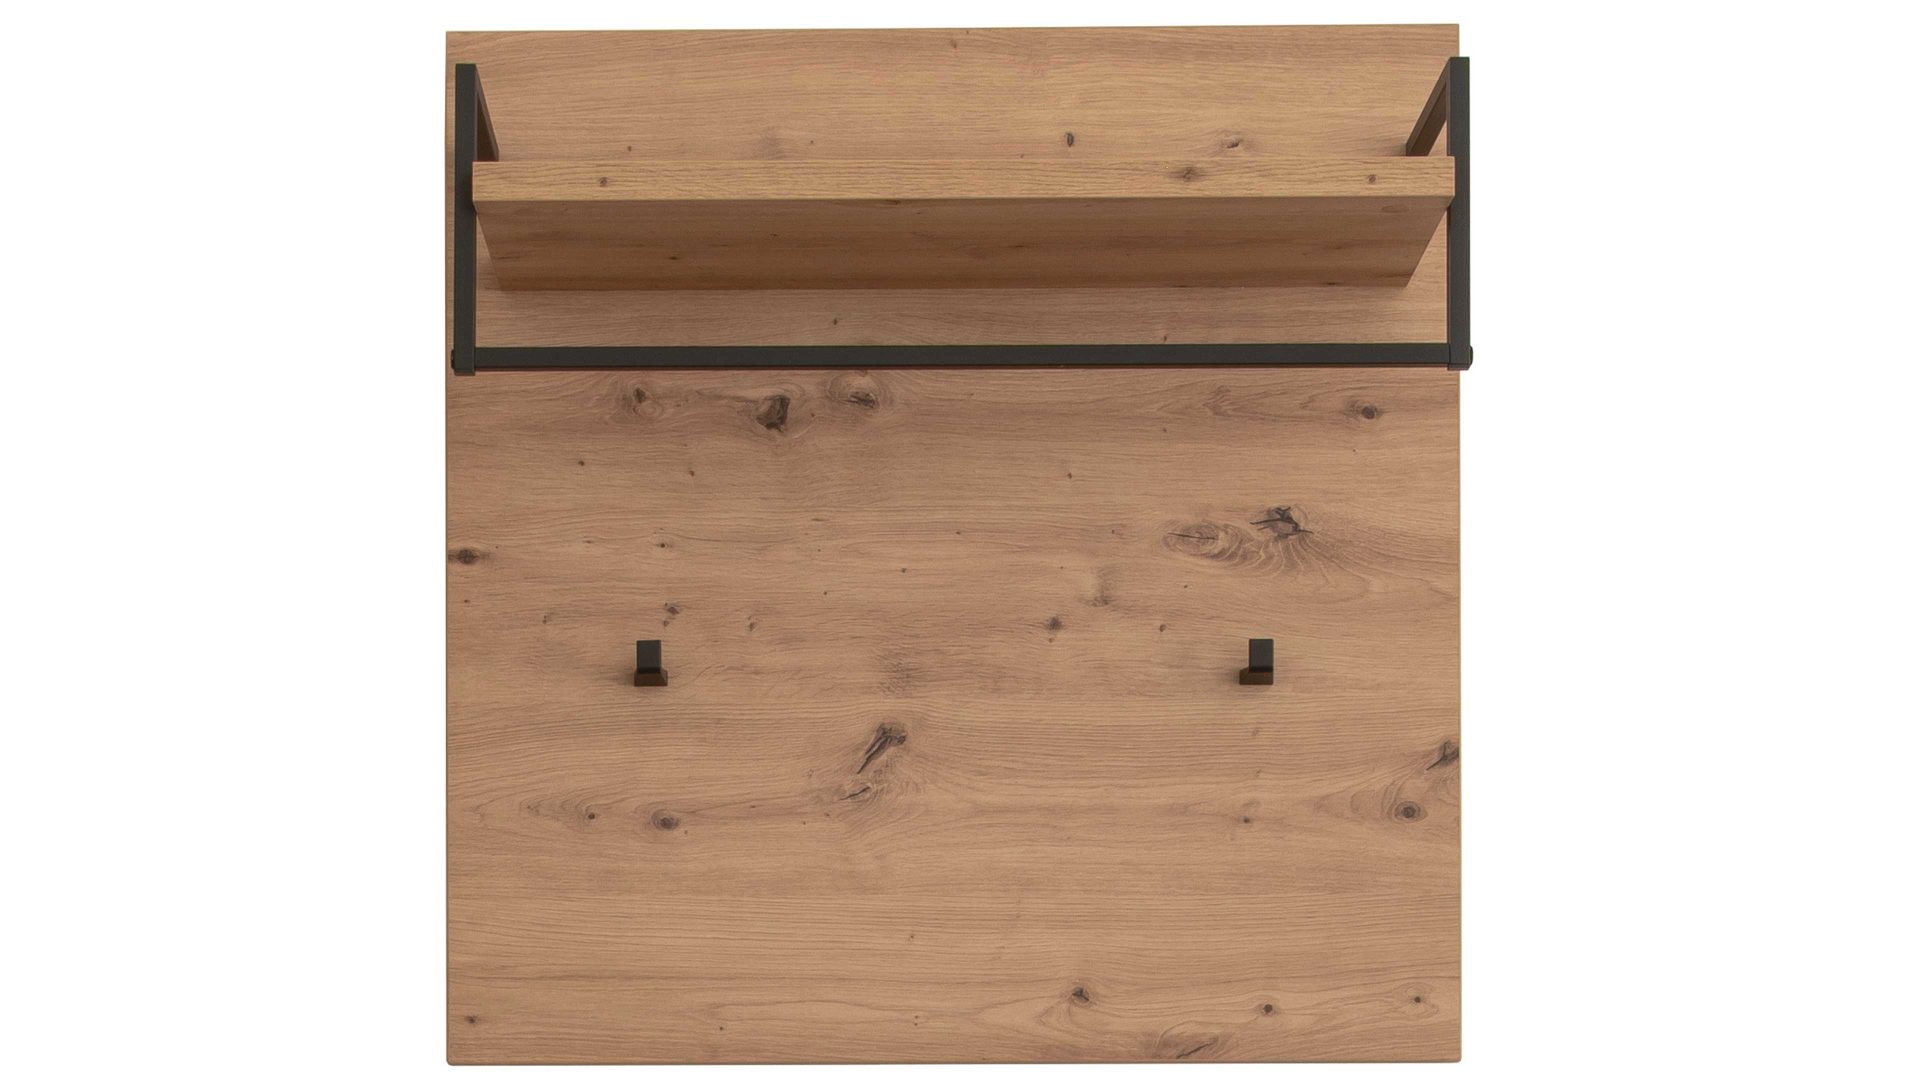 Wandgarderobe Mca furniture aus Holz in Holzfarben Garderobenserie Bergen – Wandgarderobe Balkeneiche & Anthrazit – ca. 78 x 80 cm